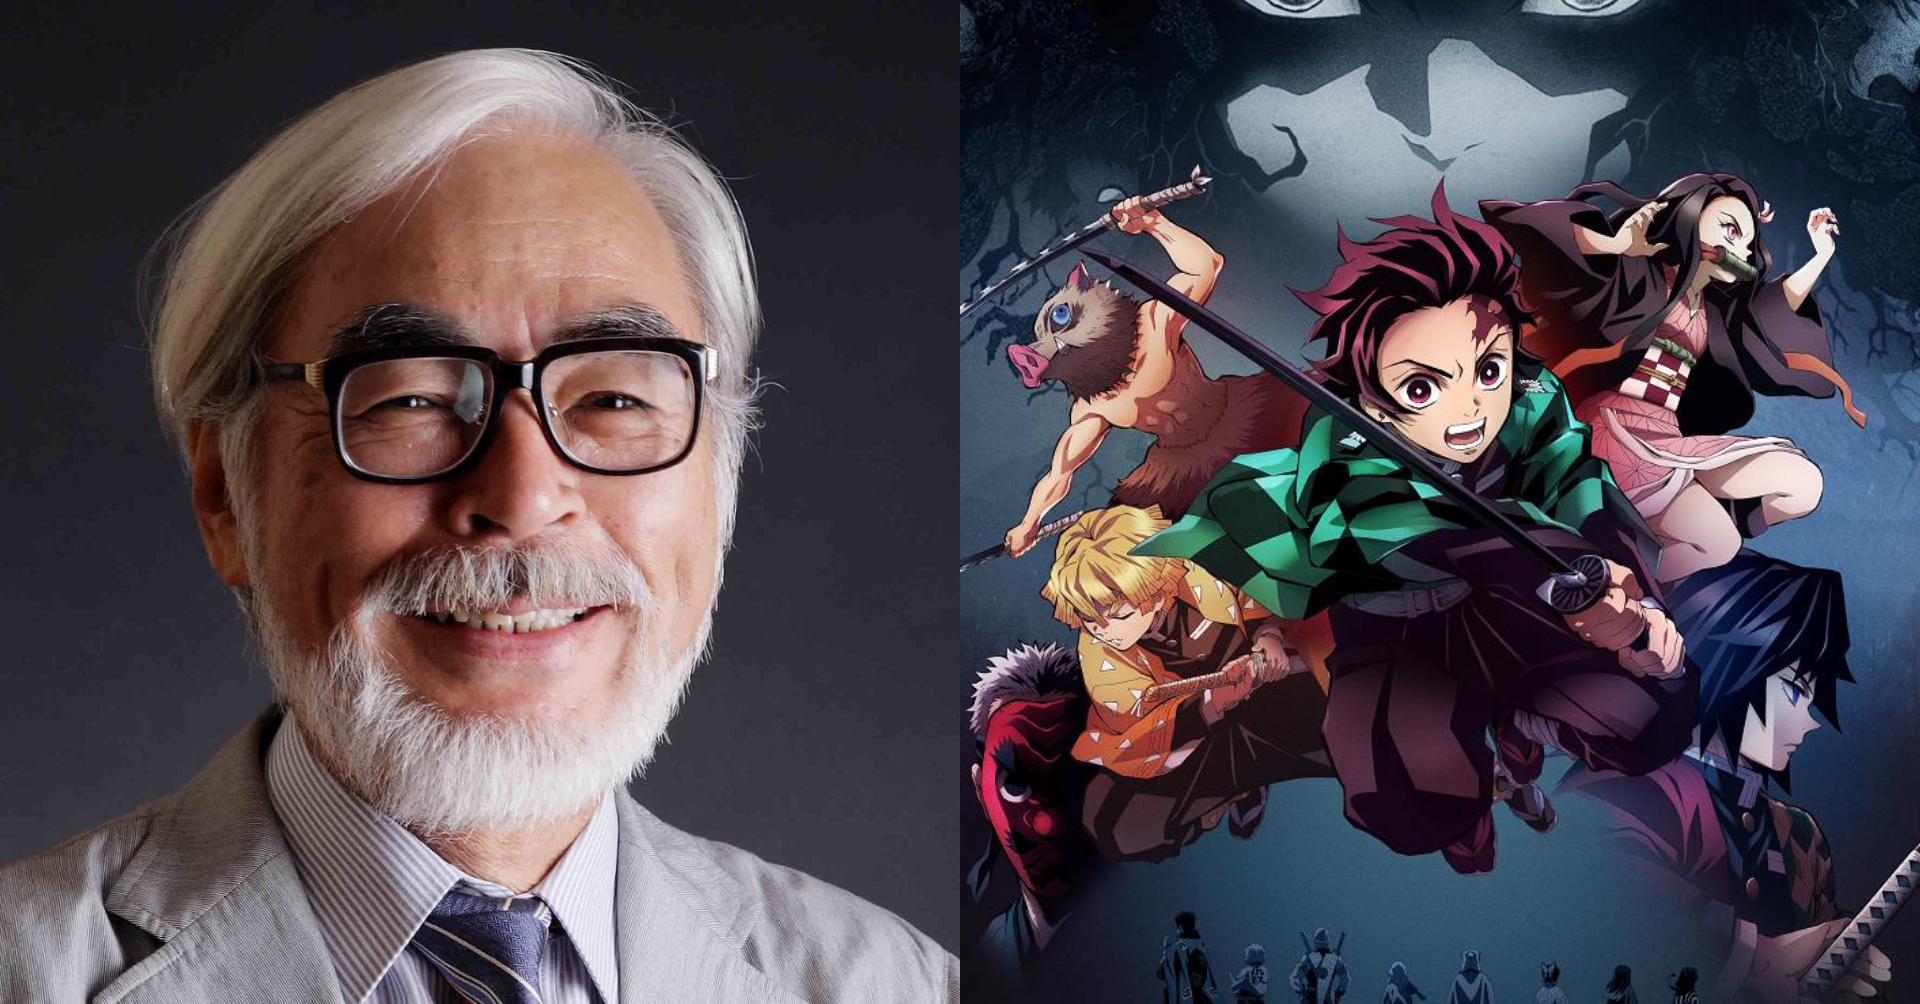 Hayao Miyazaki harrased about Demon Slayer